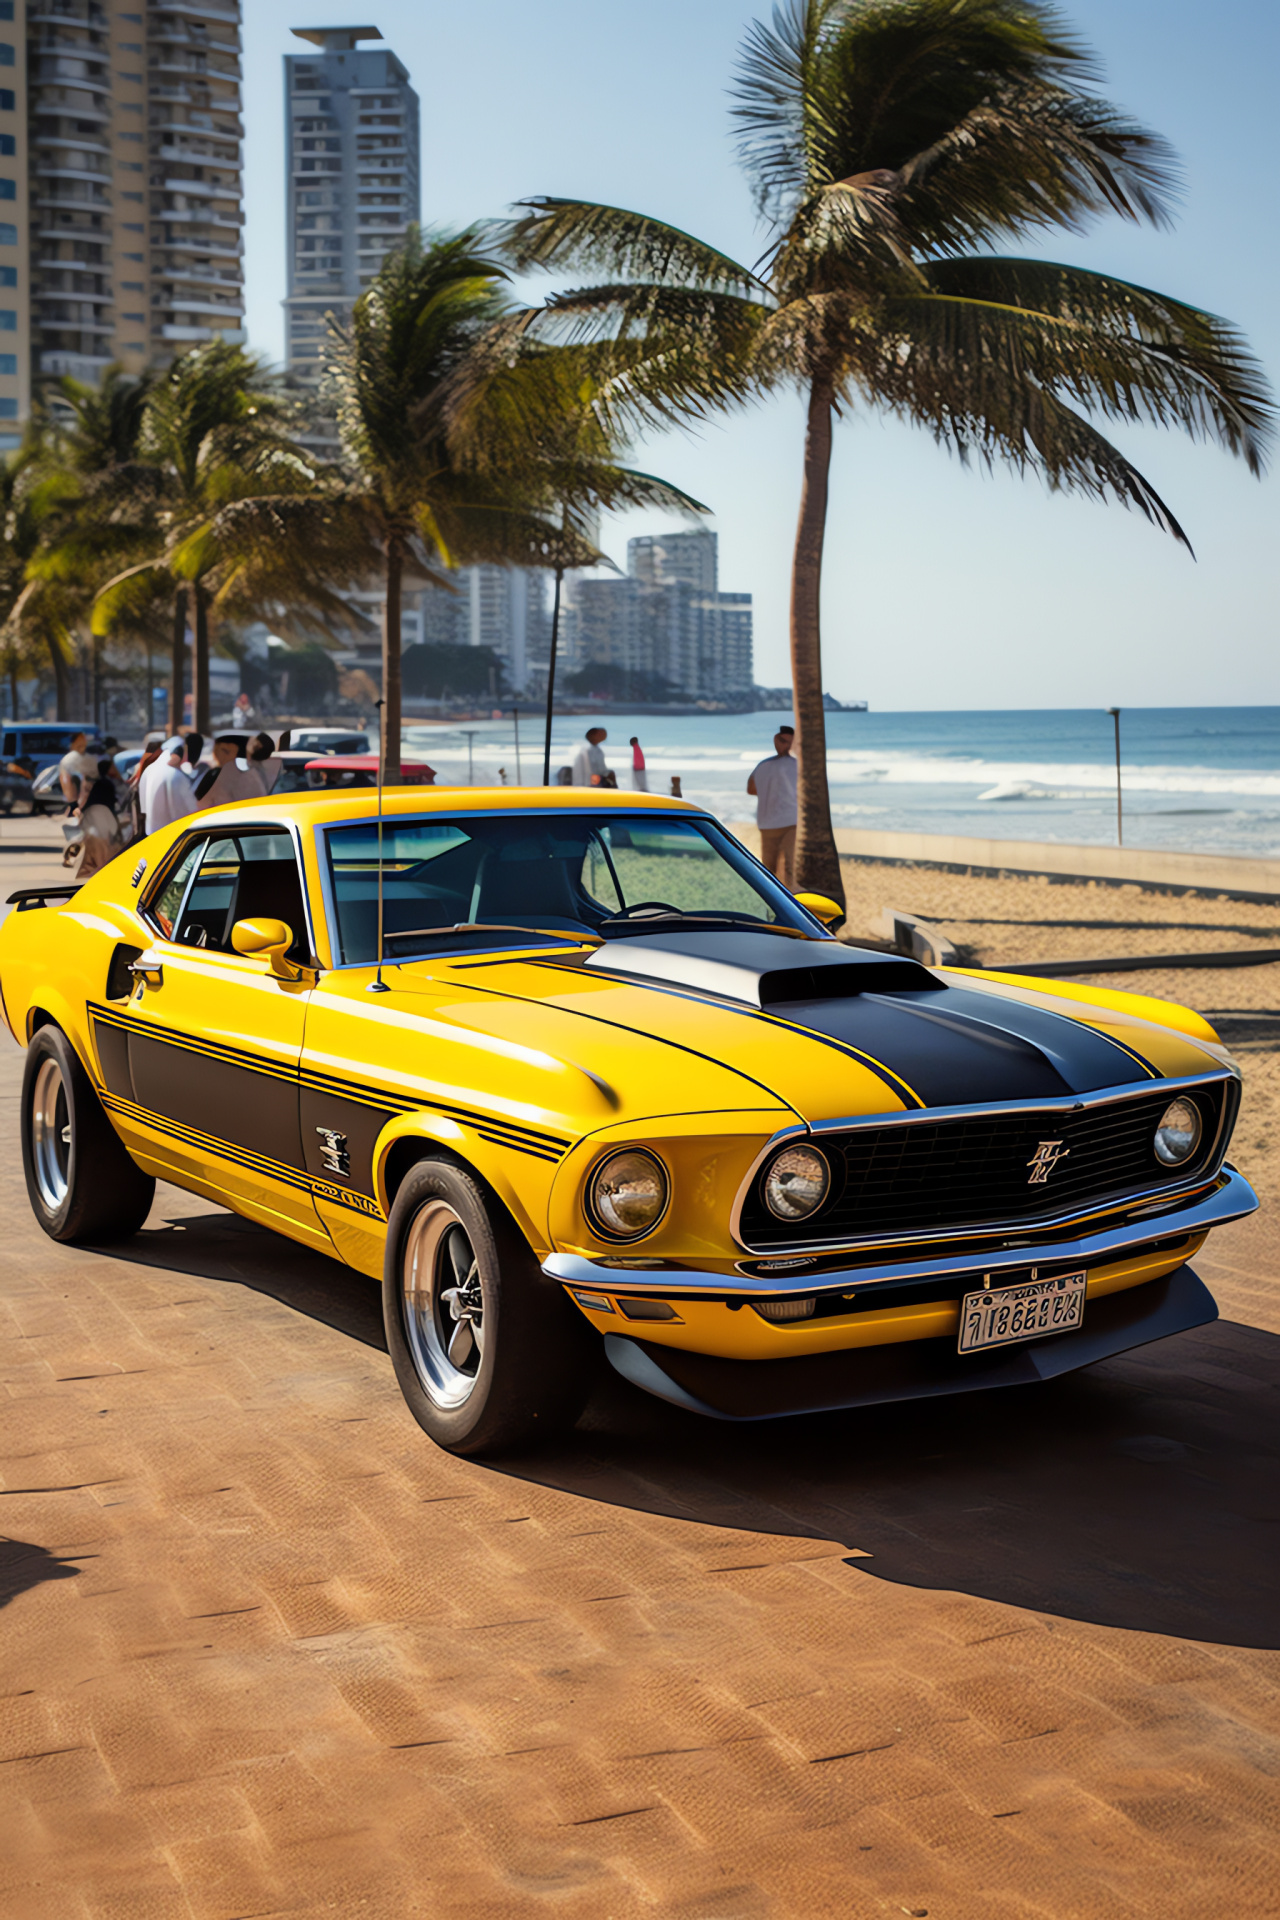 Rio de Janeiro Mustang, Festive backdrops, Carnival spirit, Mach 1 model, Vibrant automotive culture, HD Phone Image